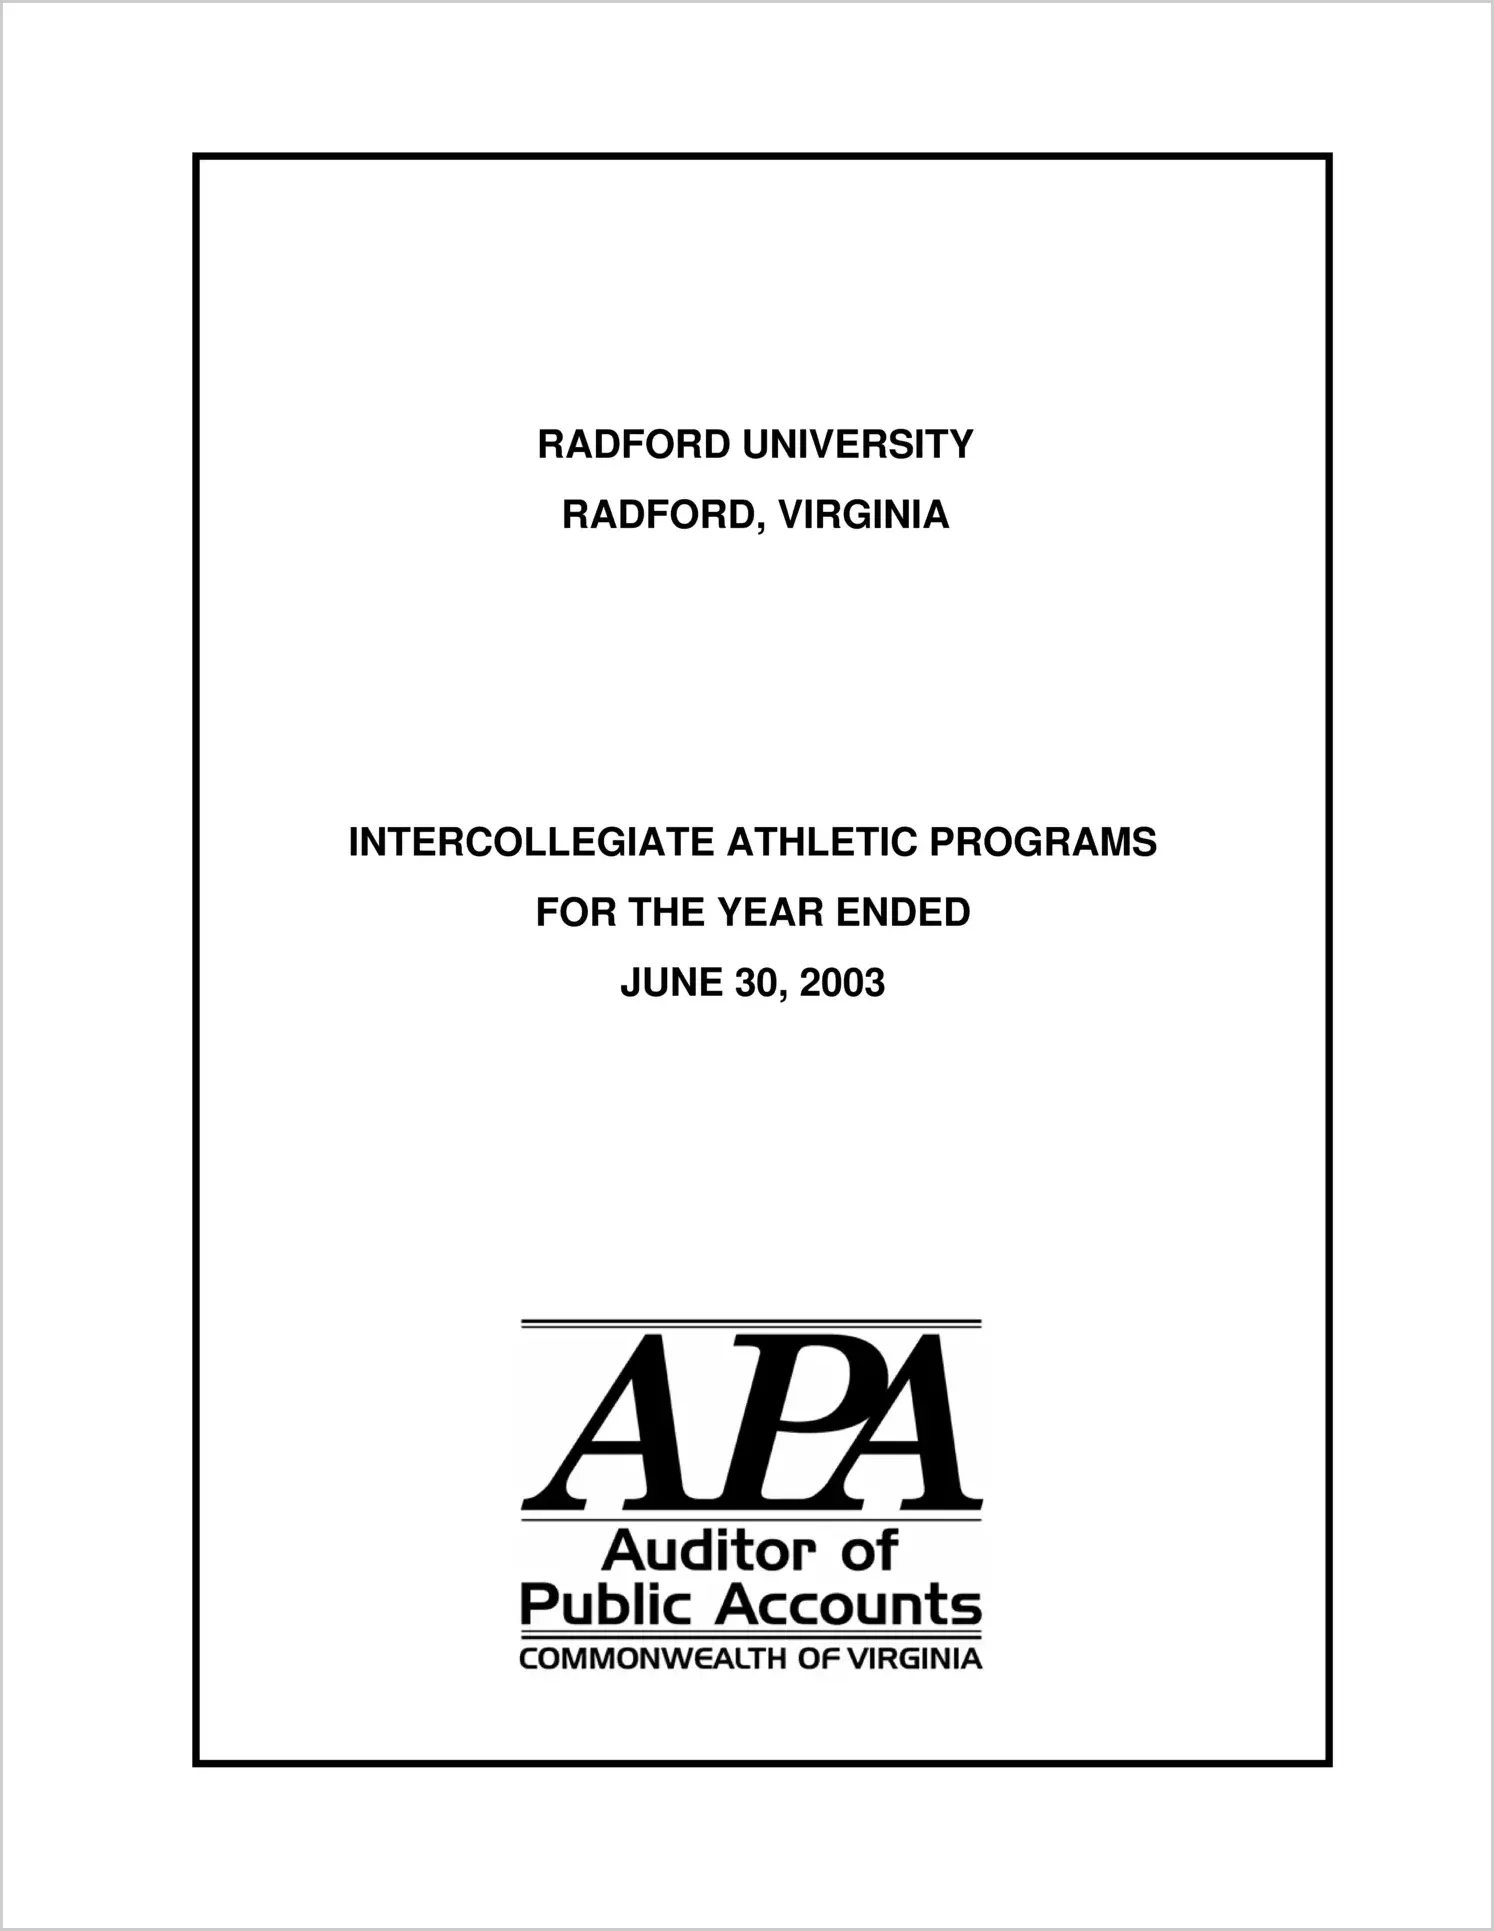 Radford University Intercollegiate Athletic Programs for the year ended June 30, 2003